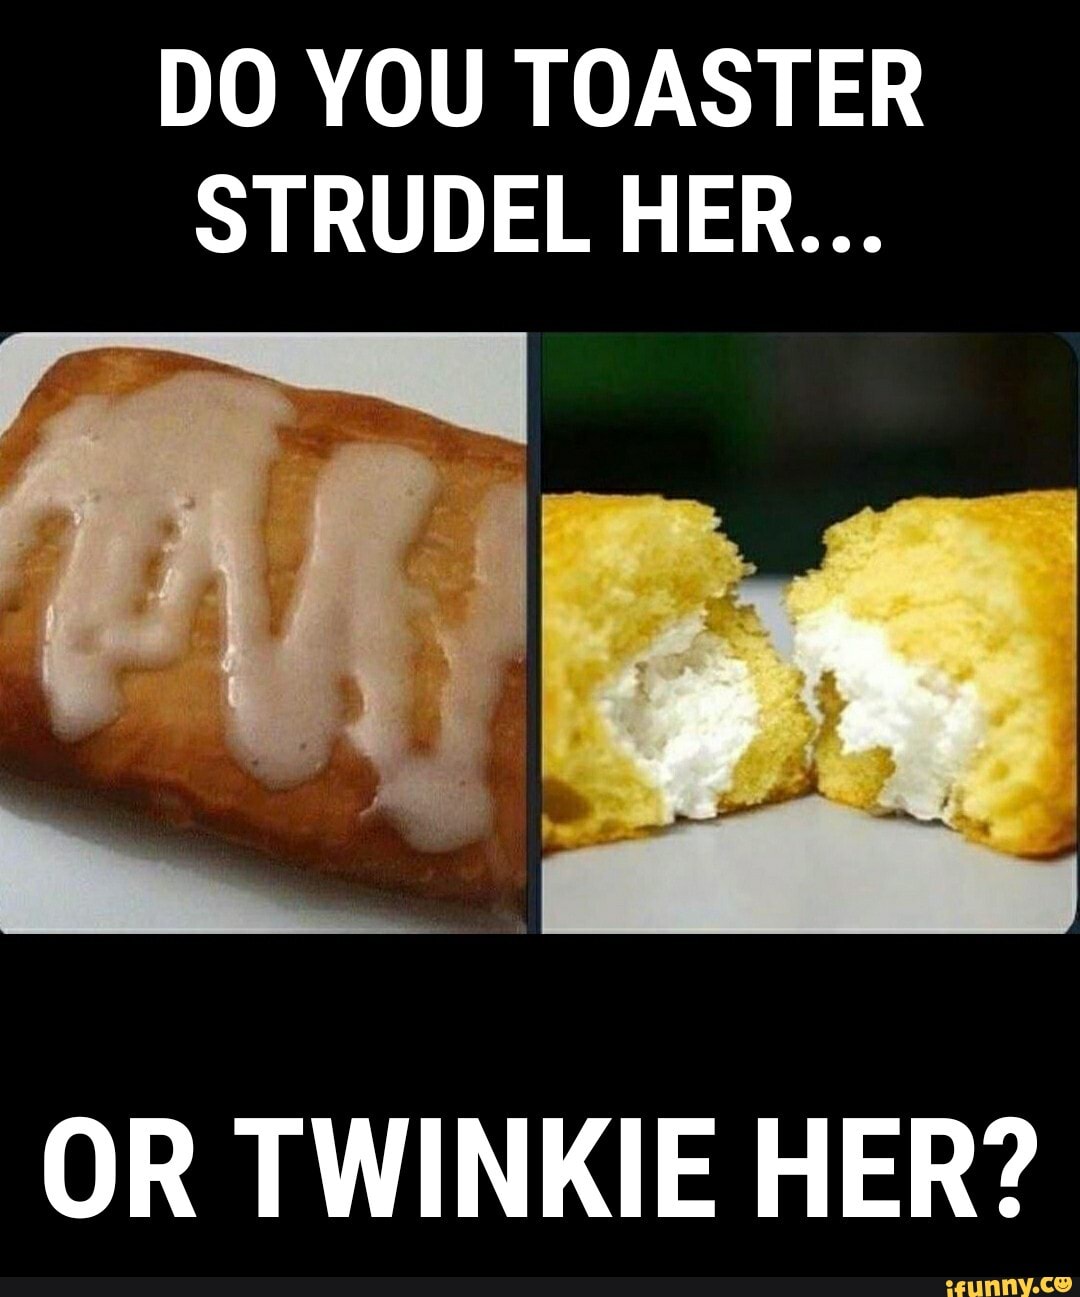 Toaster strudel vs twinkie